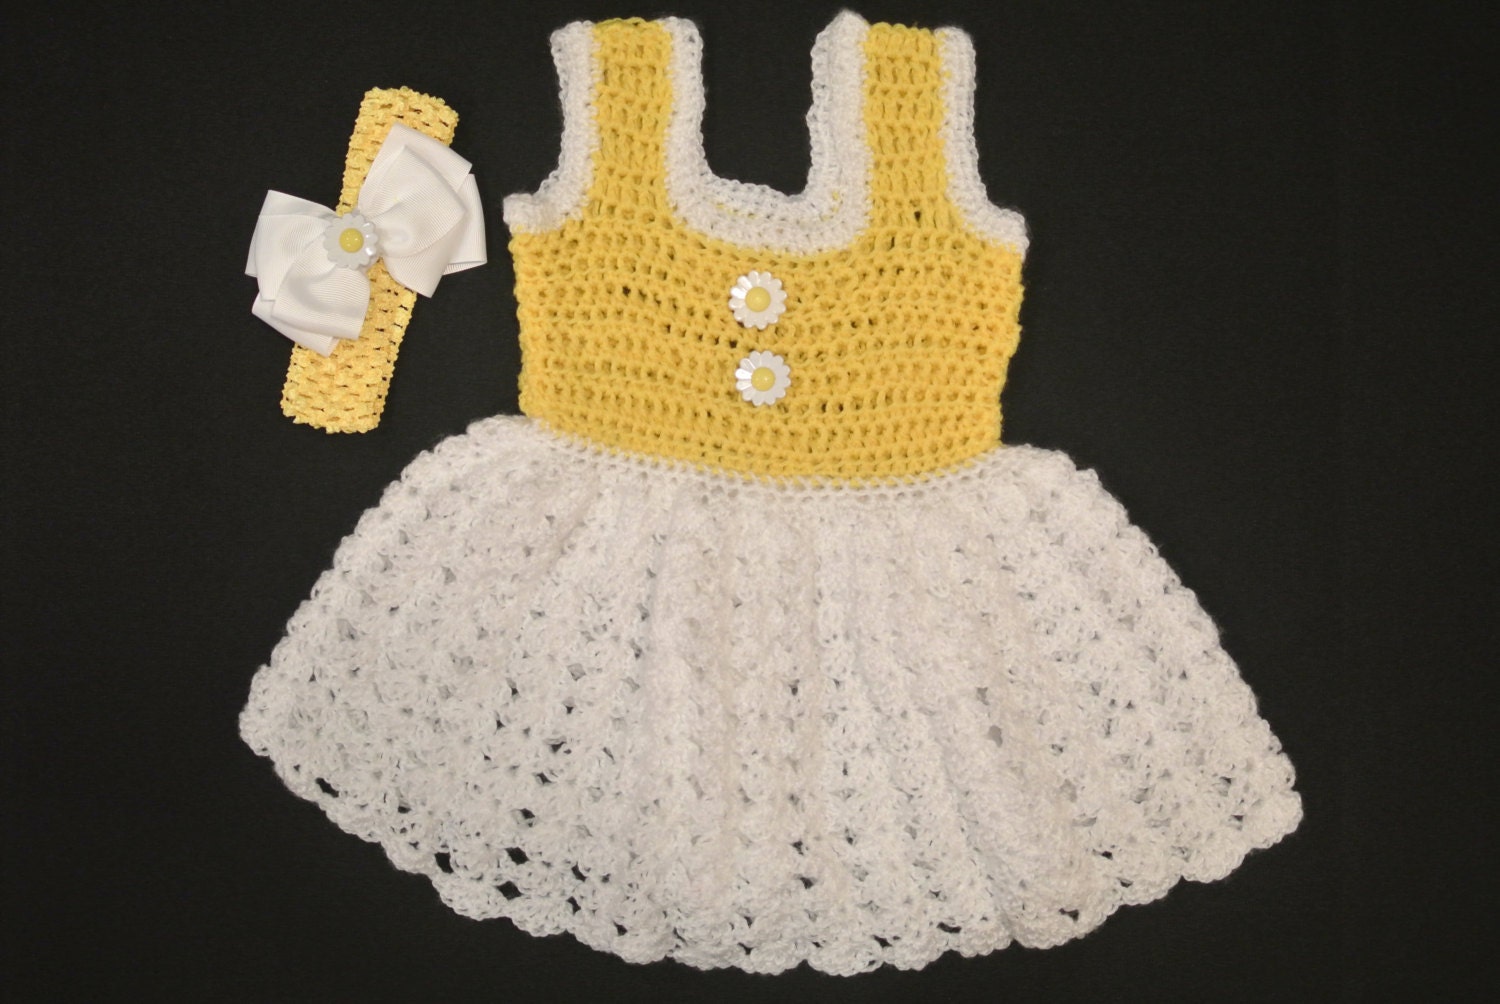 Crocheted daisy dress with matching headband